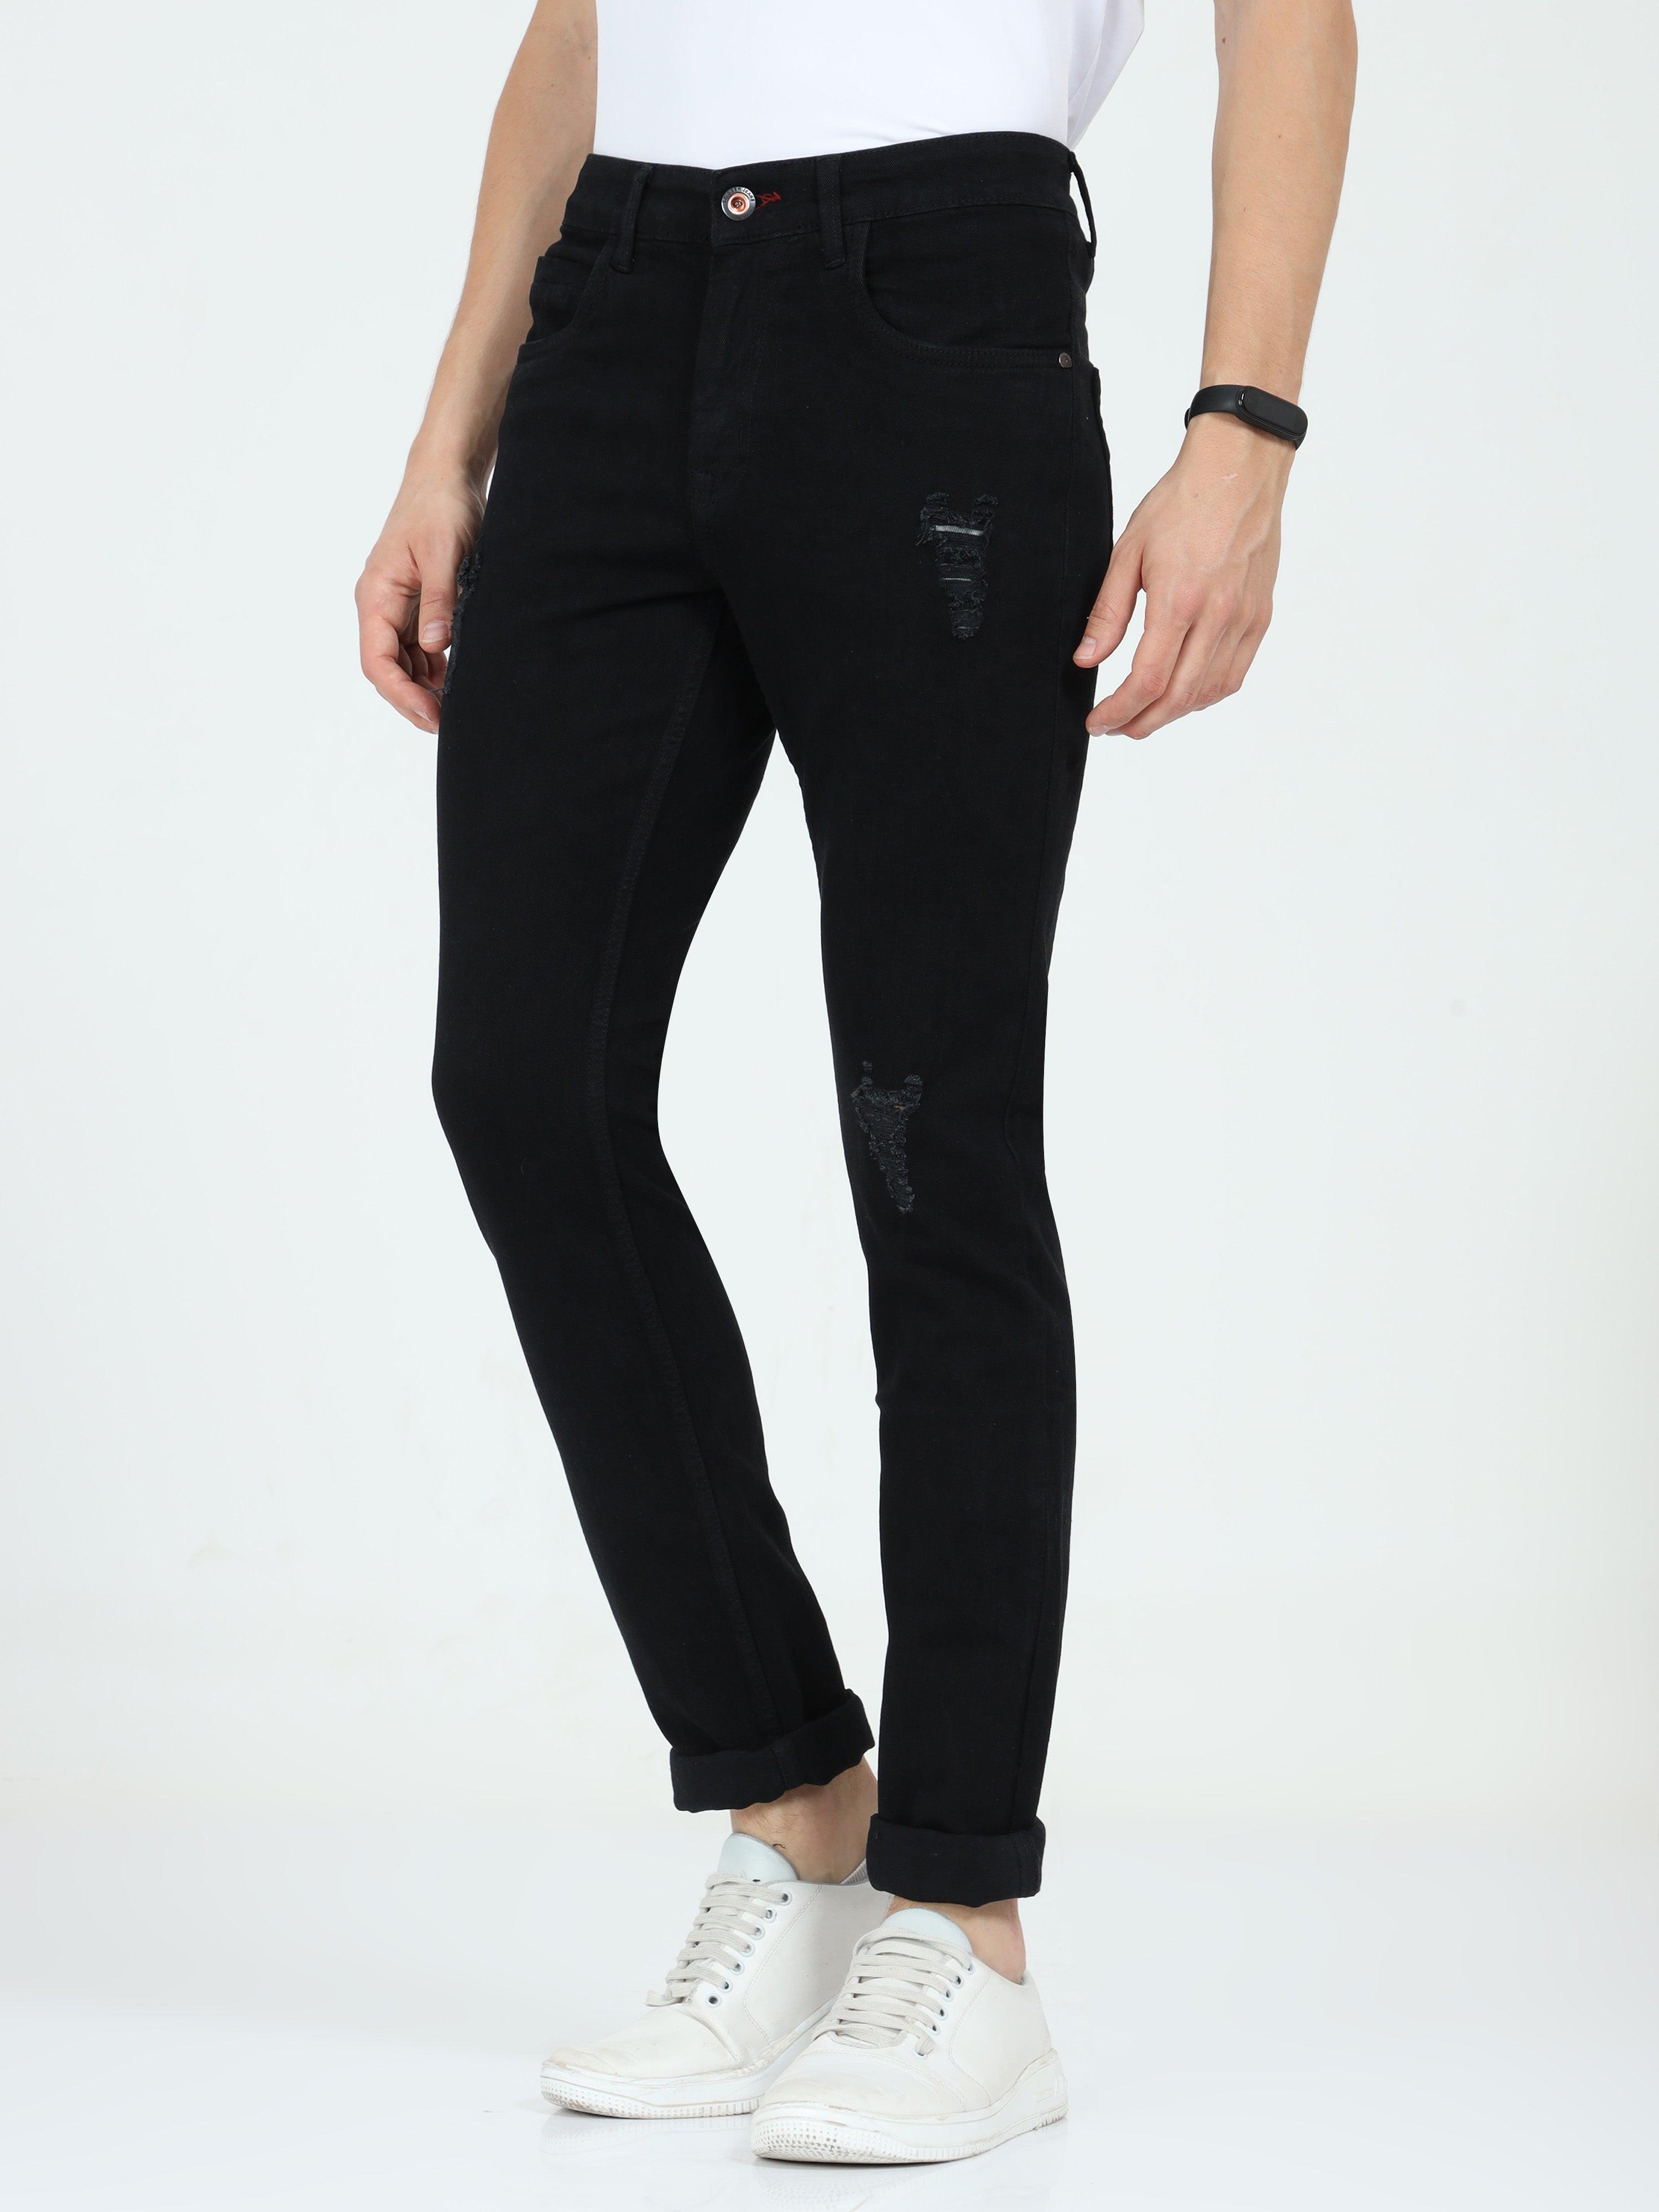 Men's Slim Fit Distressed Jeans - Black